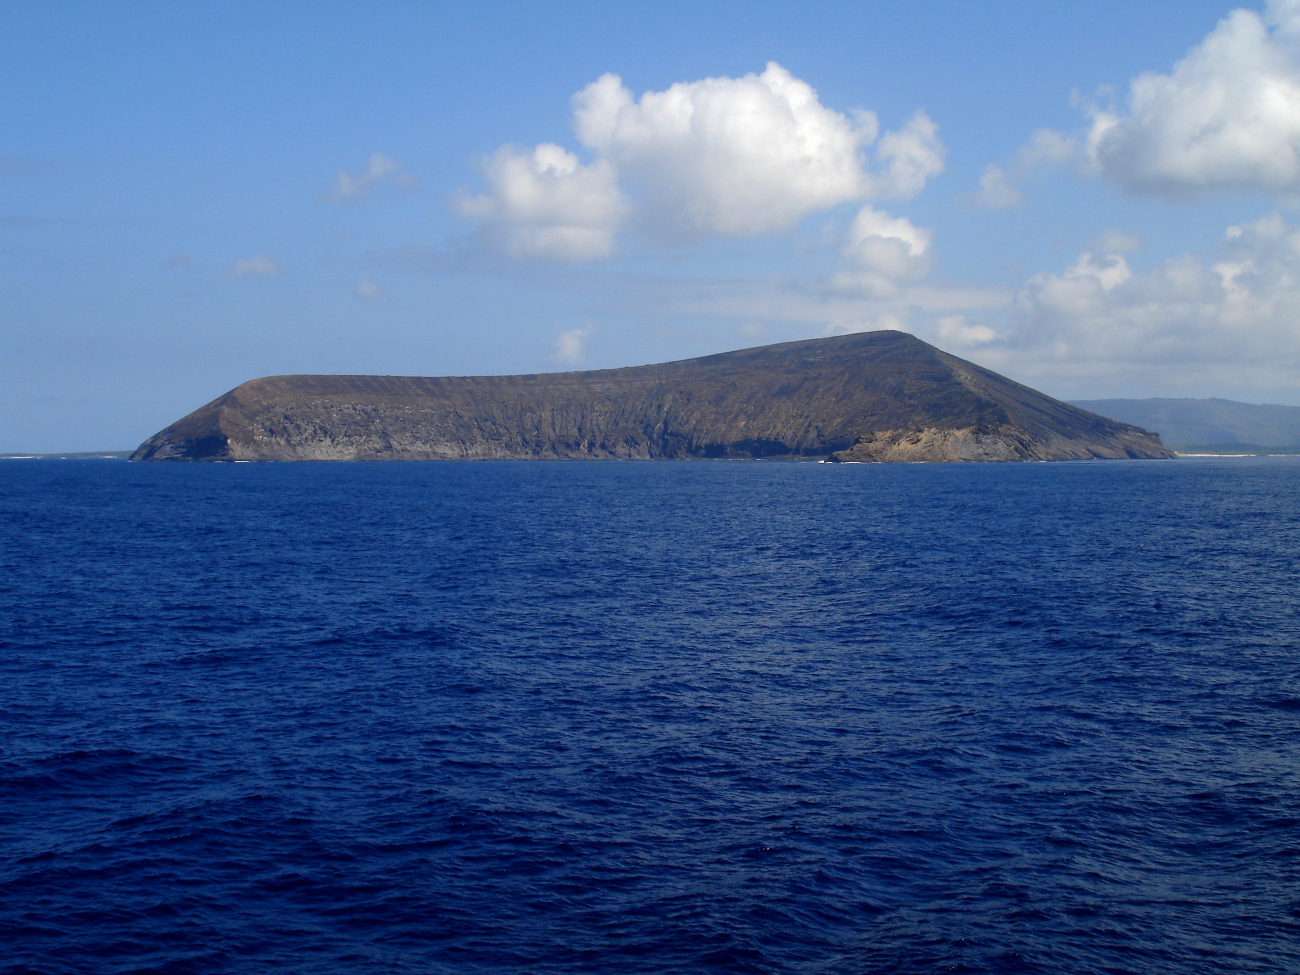 Lehua Island